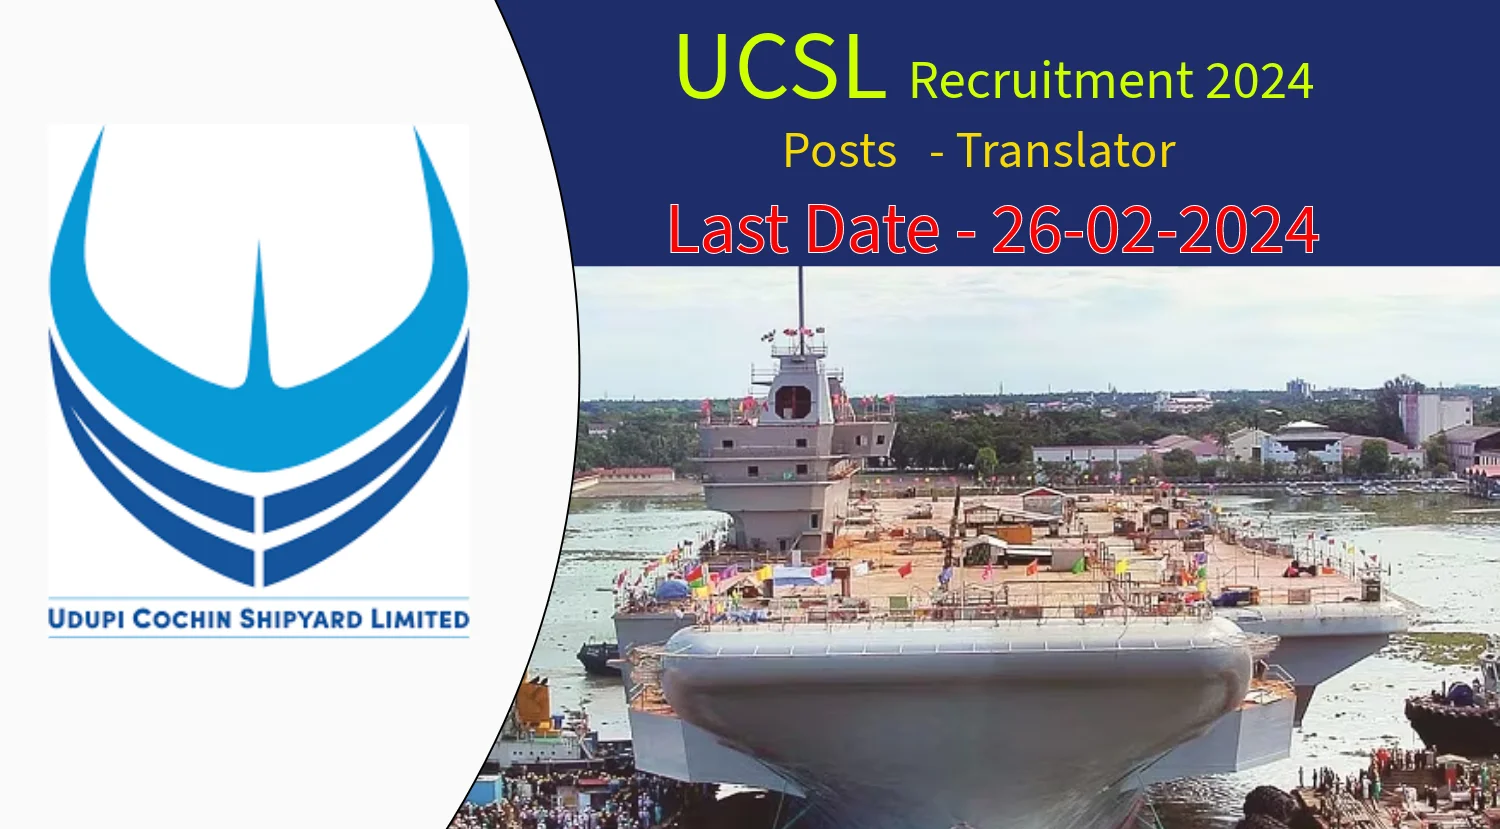 UCSL Recruitment 2024 for Translator Posts